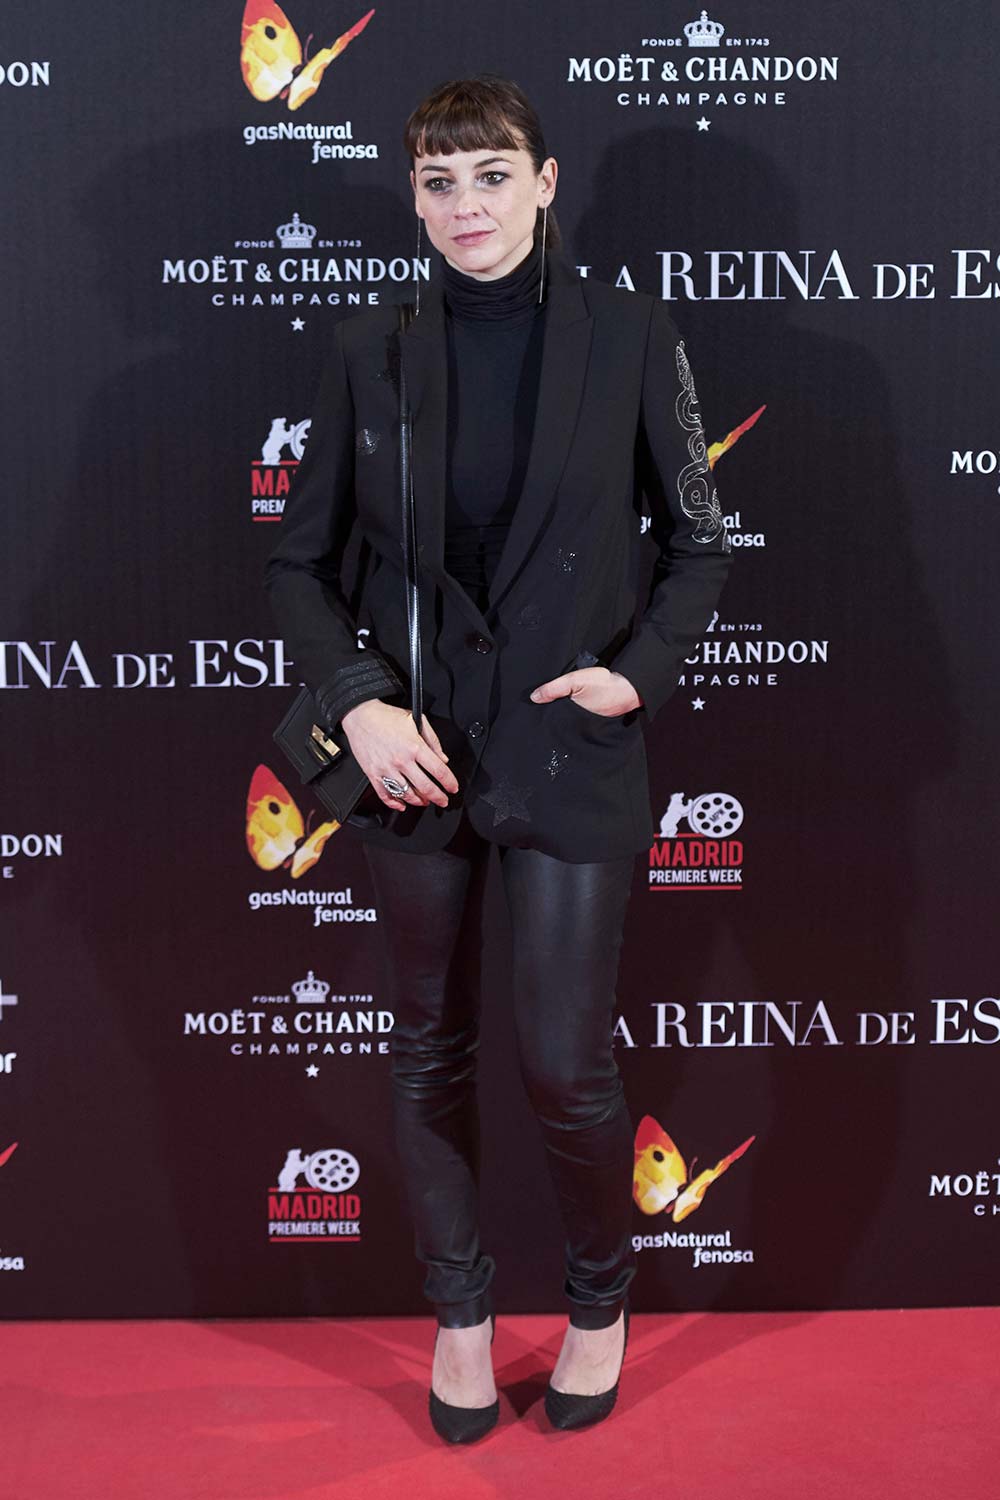 Leonor Watling attends La Reina de Espana premiere